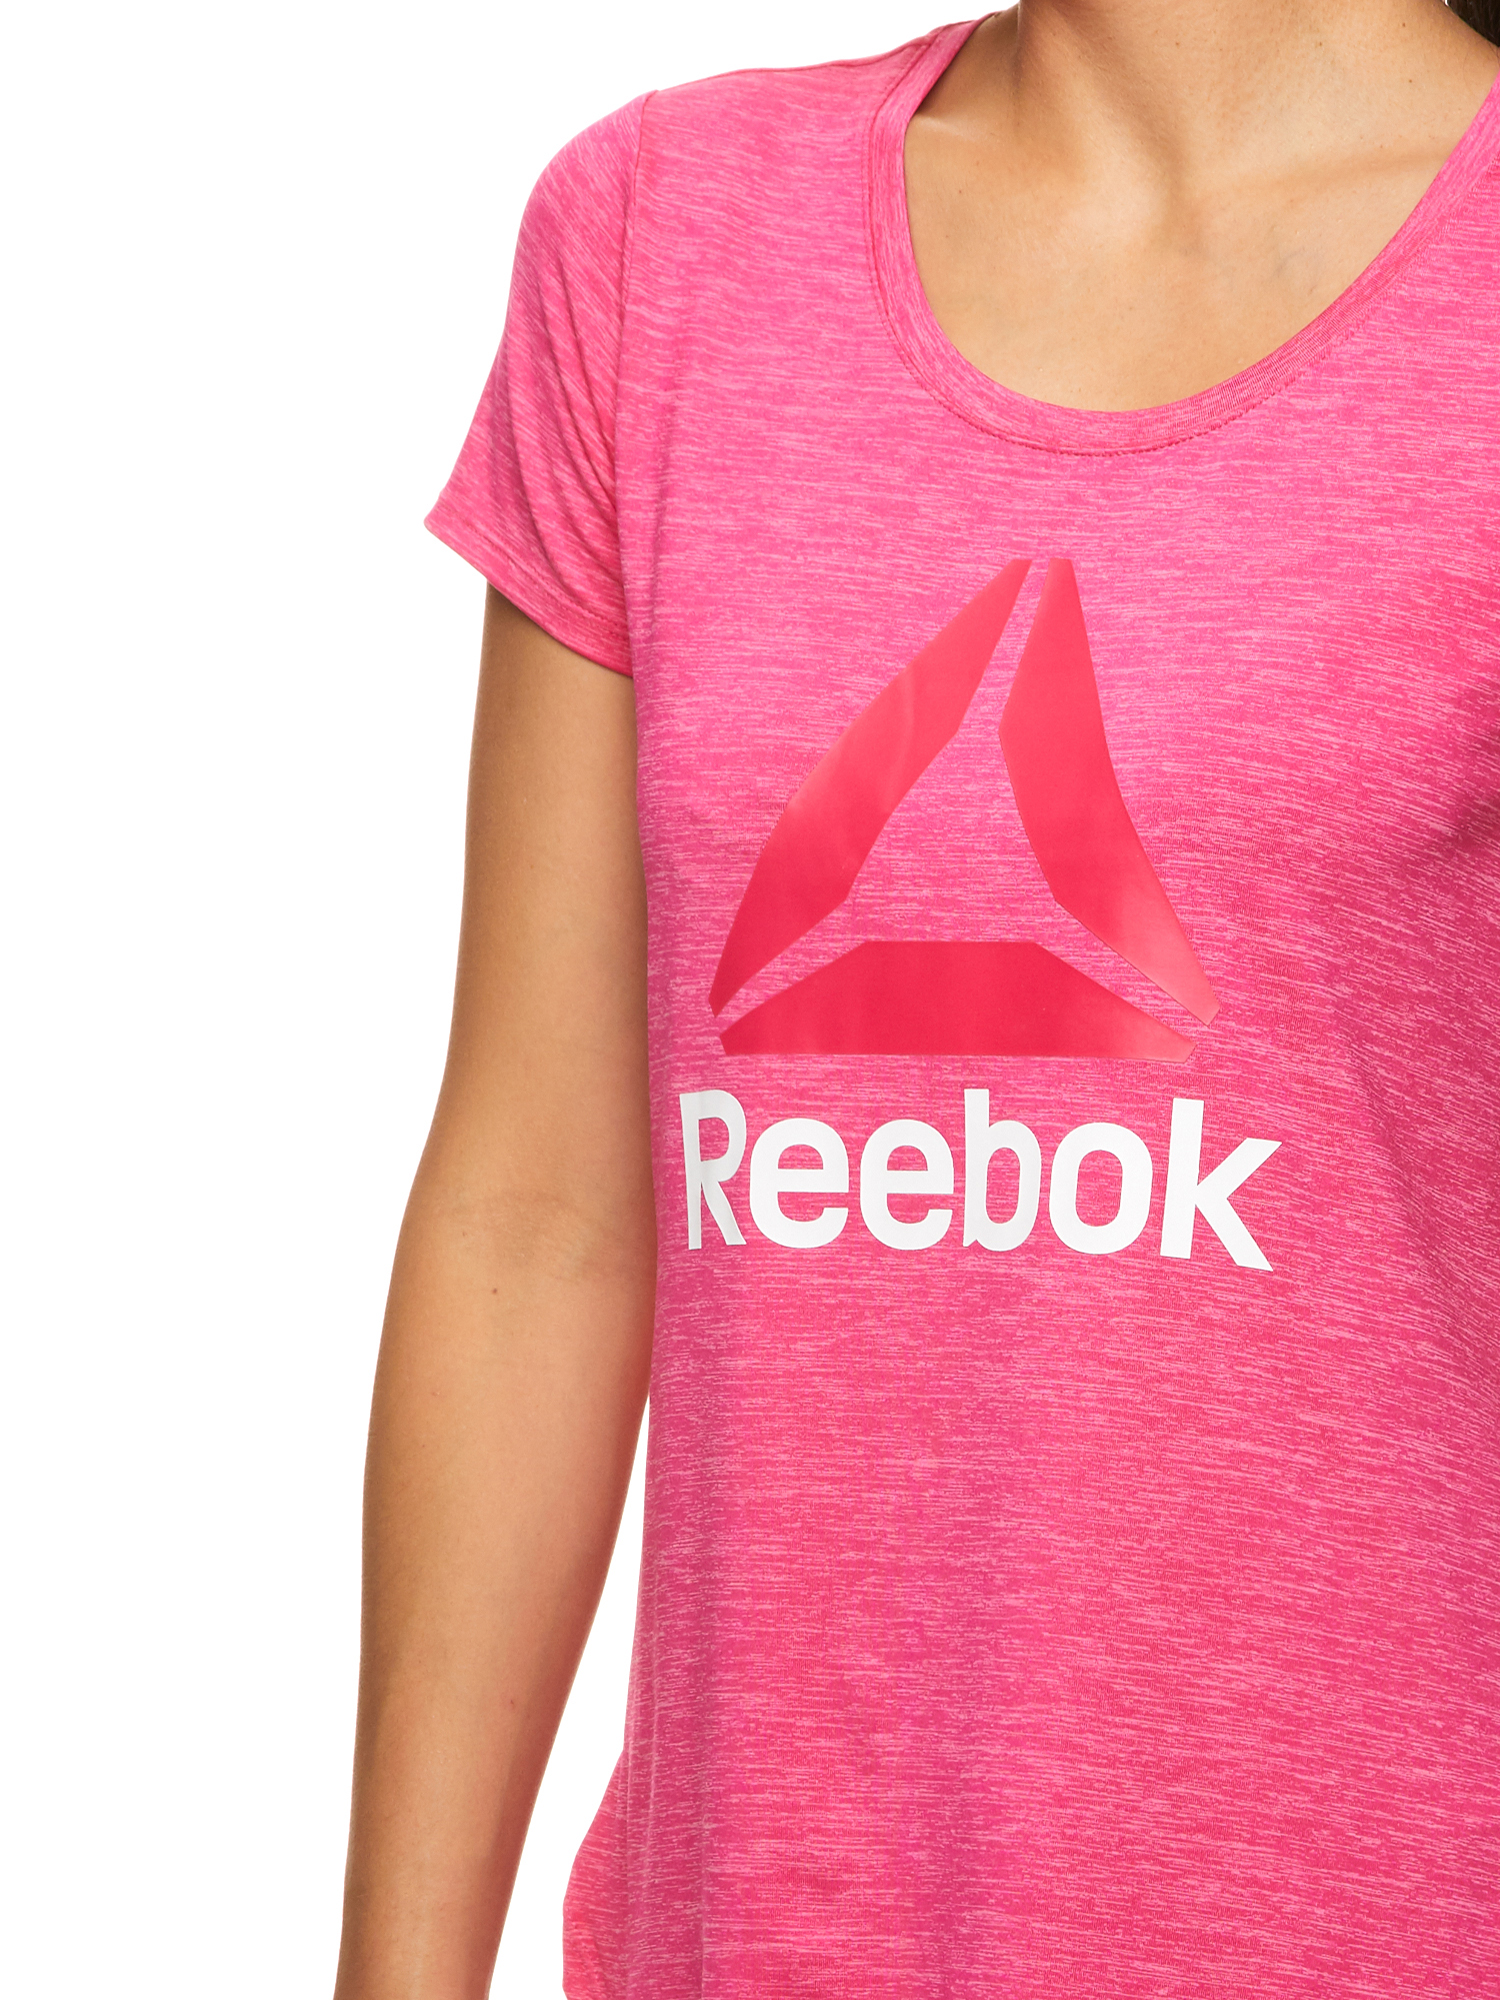 Reebok Women's Graphic Short Sleeve T-Shirt - image 4 of 4